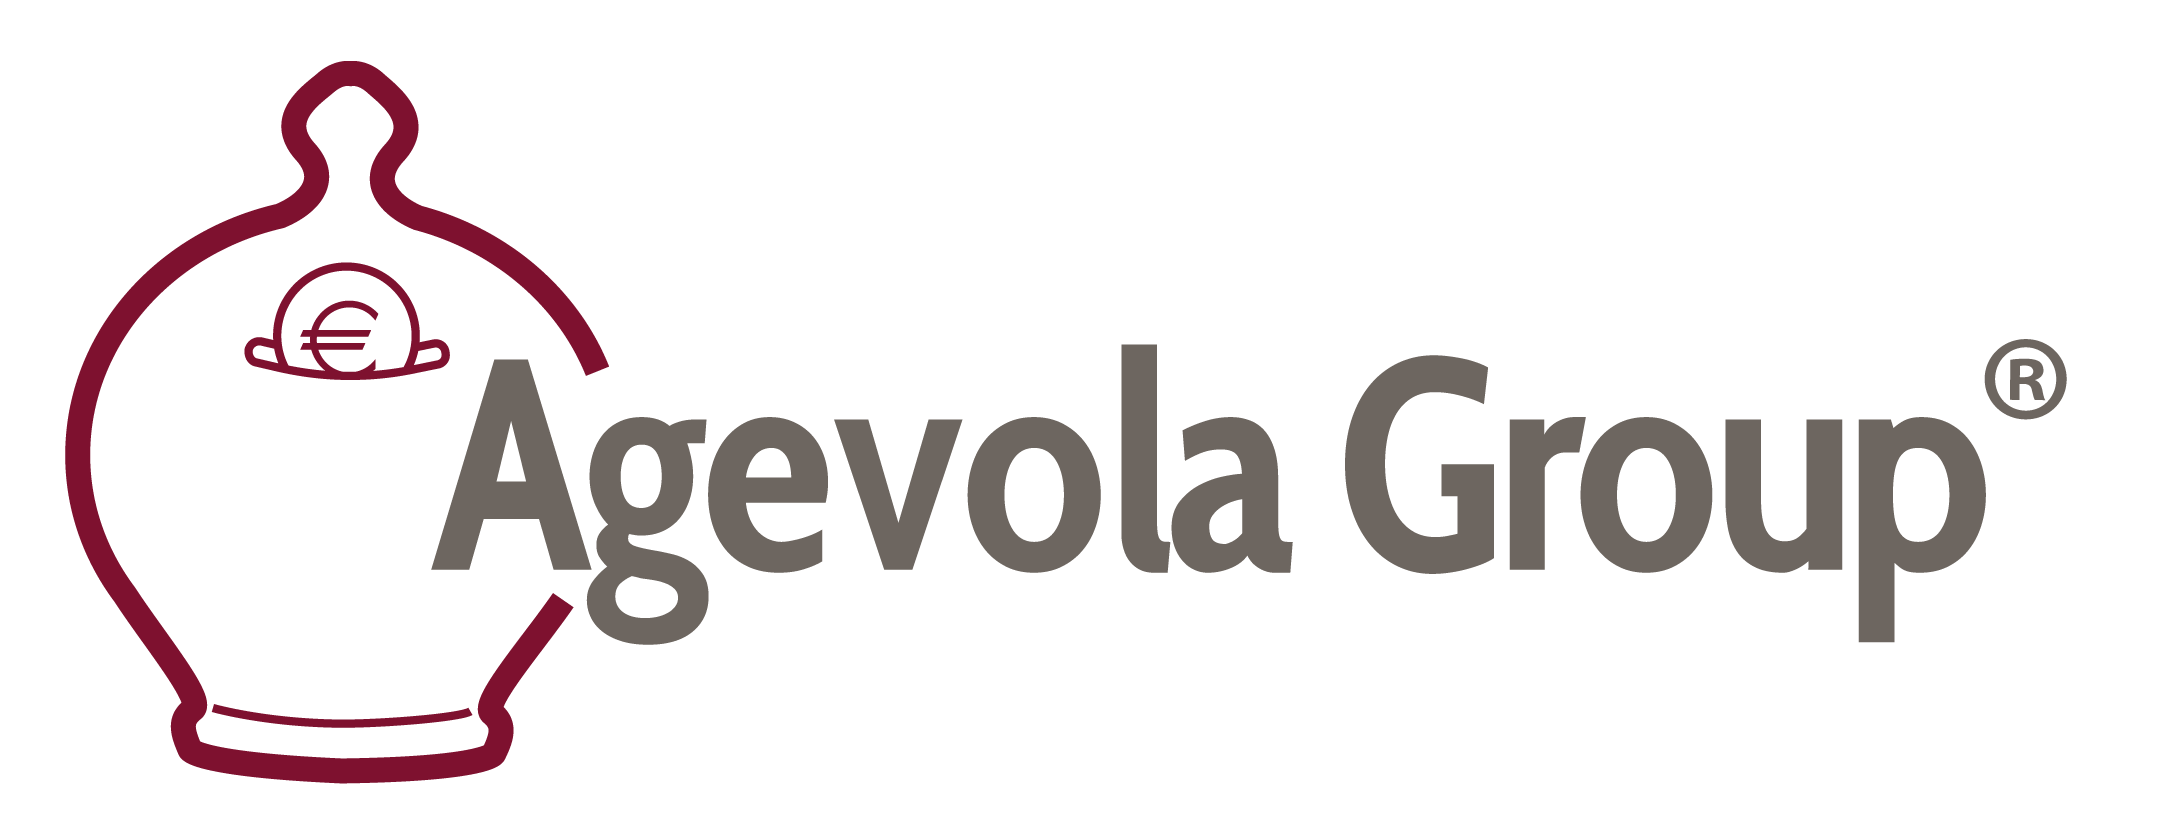 Agevola Group logo